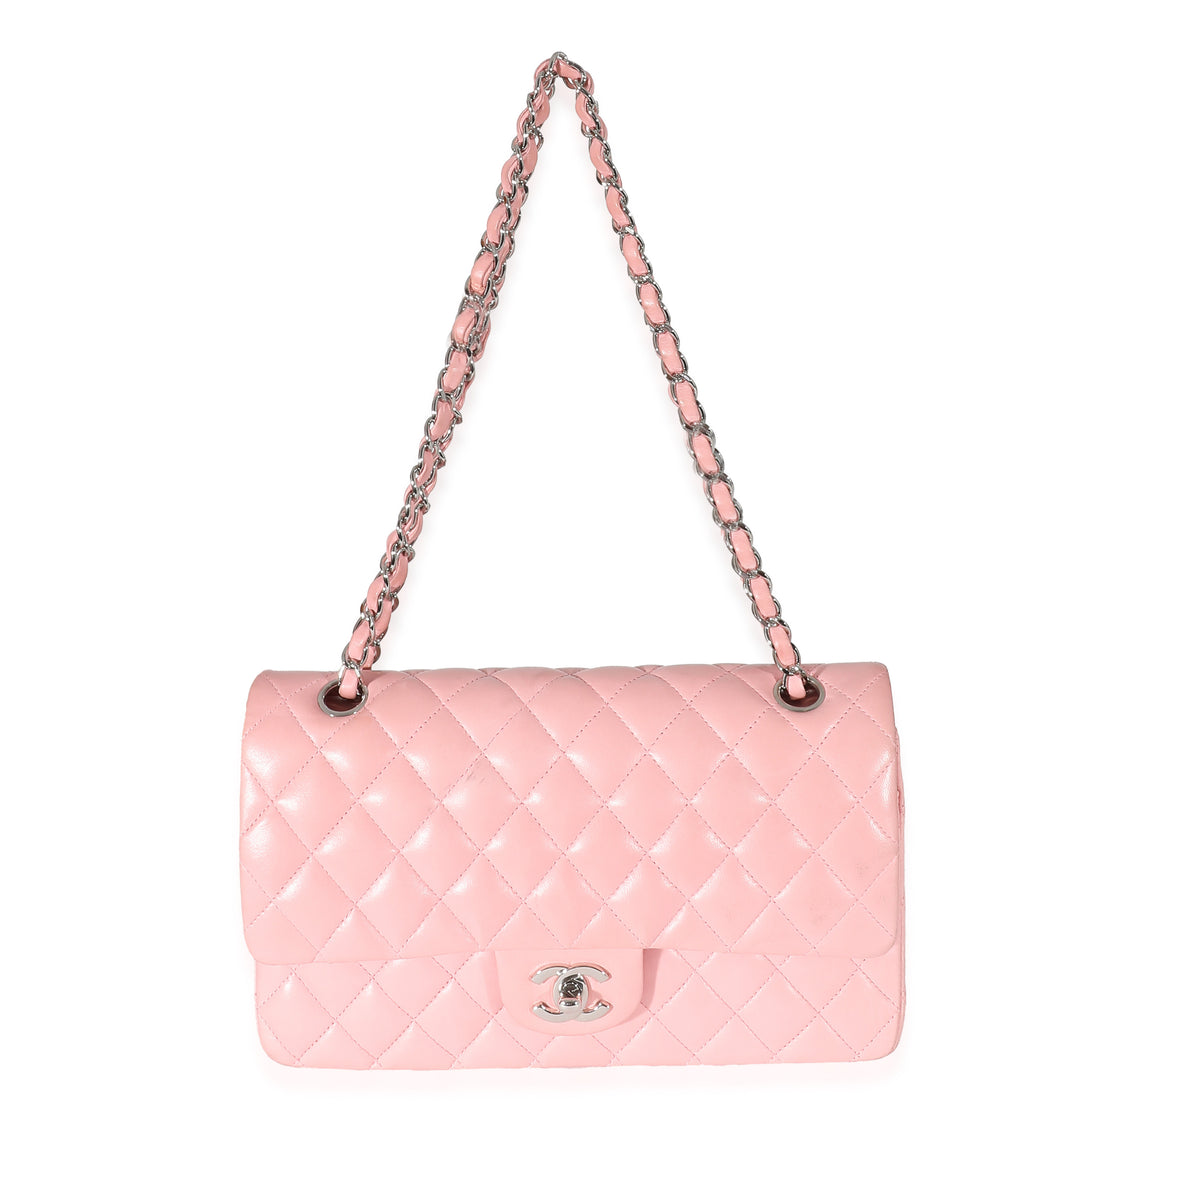 Chanel Classic Medium Double Flap, Pink Lambskin Leather, Gold Hardware,  New in Box - Julia Rose Boston